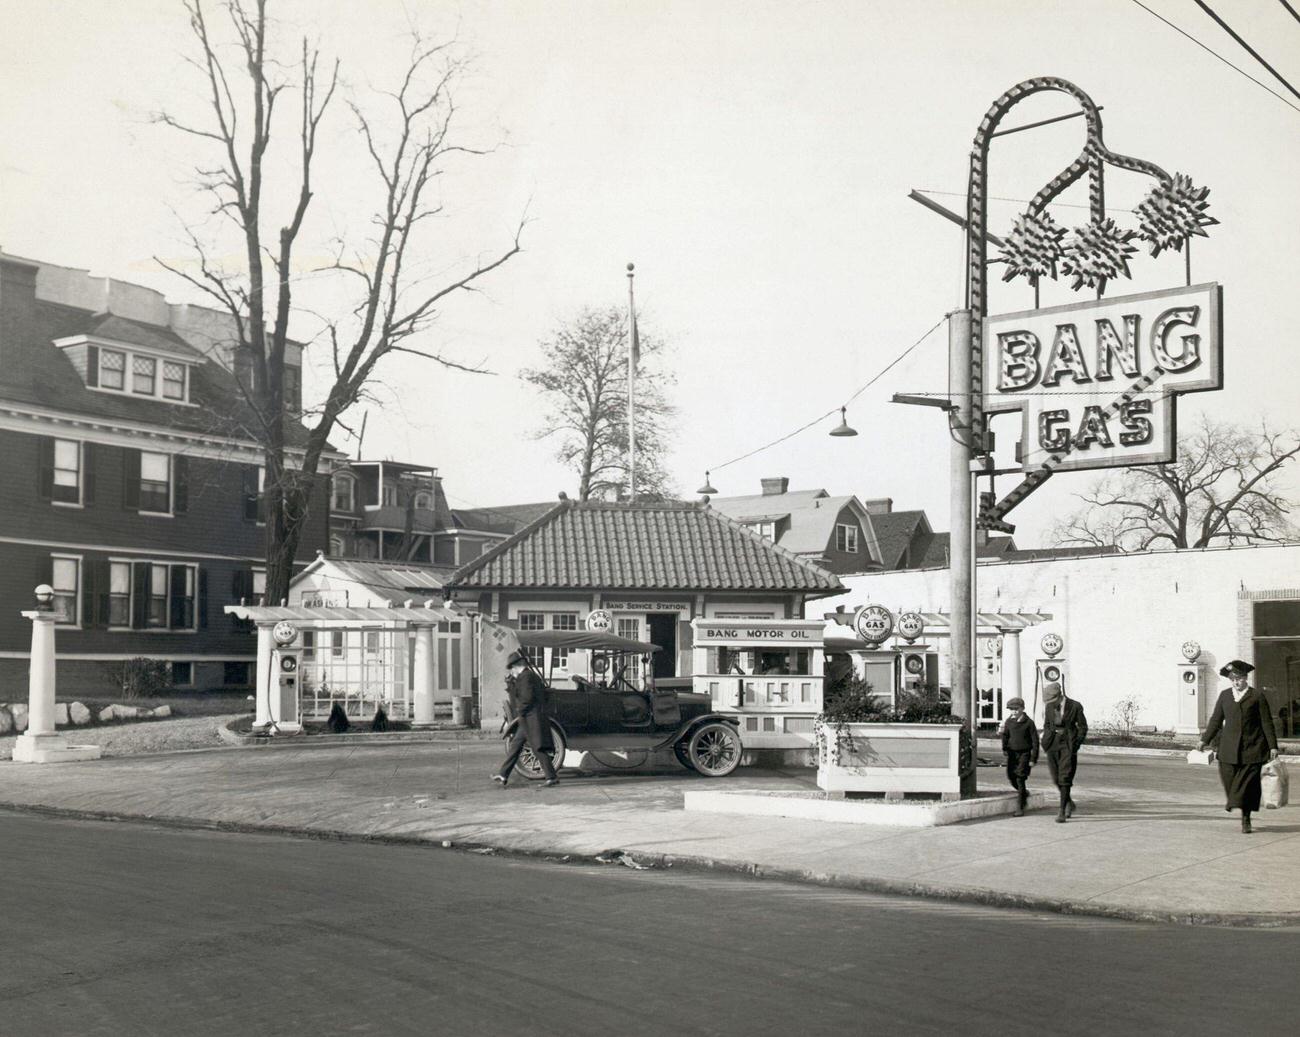 Vintage Gas Service Station, 1910s